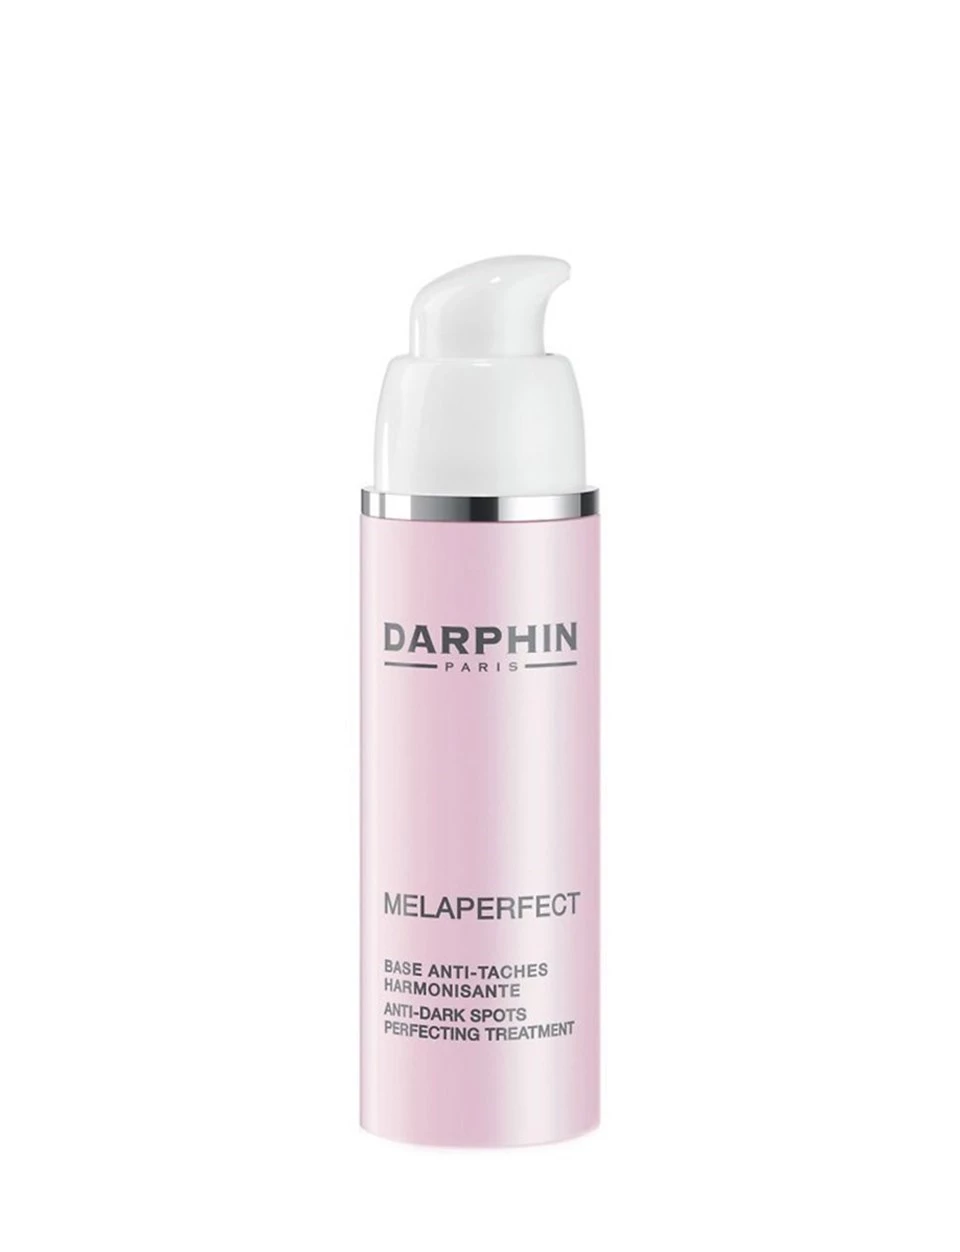 Darphin Melaperfect Anti-Dark Spots Treatment 30